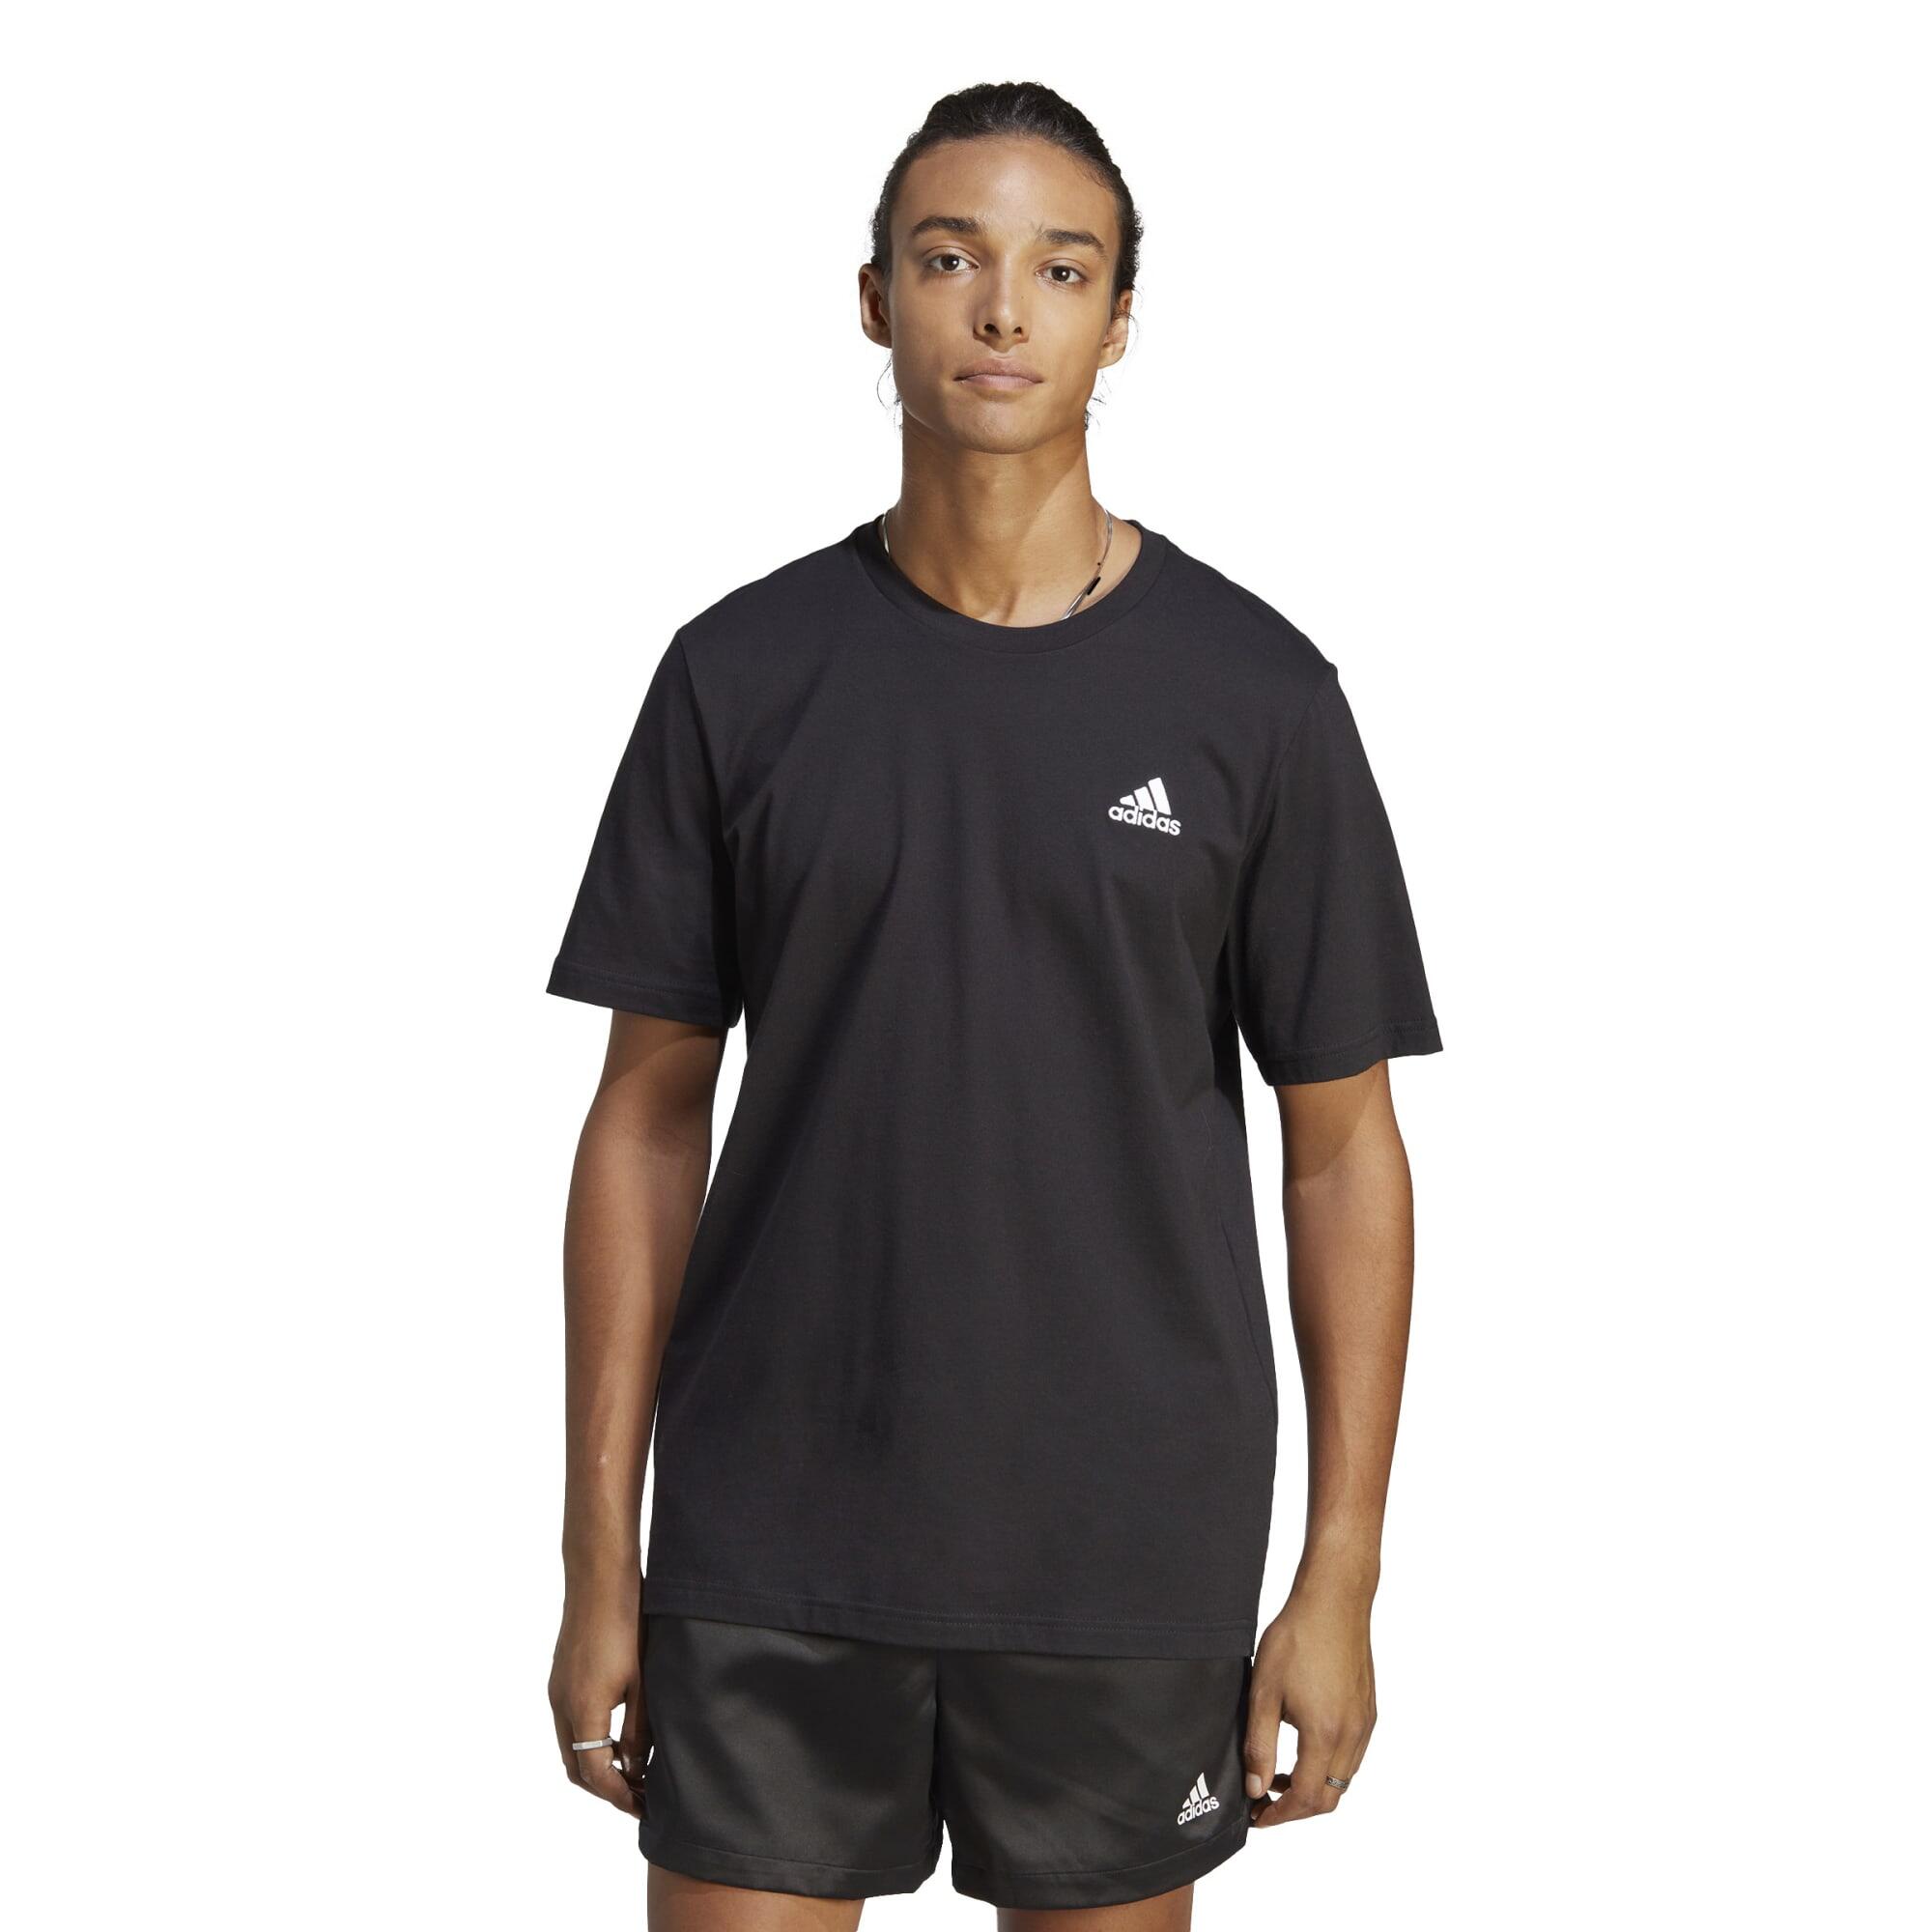 Decathlon | T-shirt uomo fitness ADIDAS regular 100% cotone nera |  Adidas